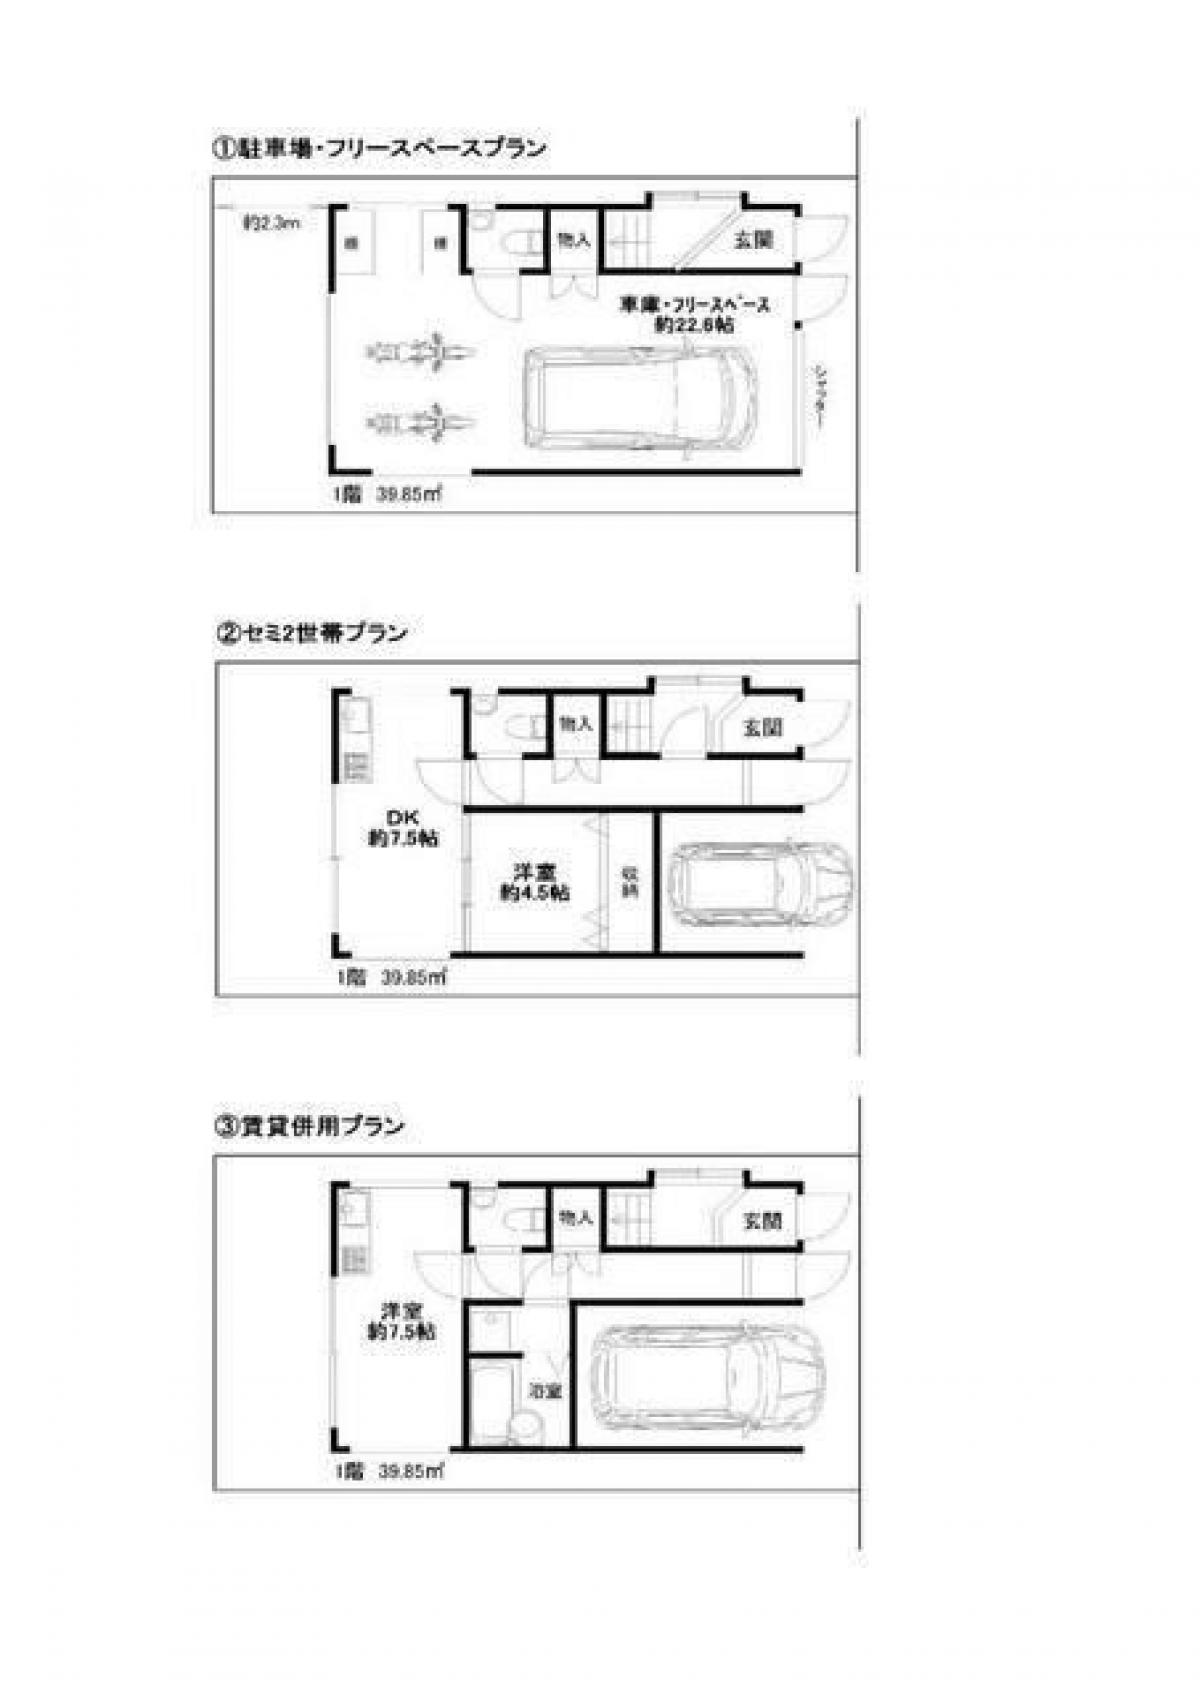 Picture of Home For Sale in Fuchu Shi, Hiroshima, Japan